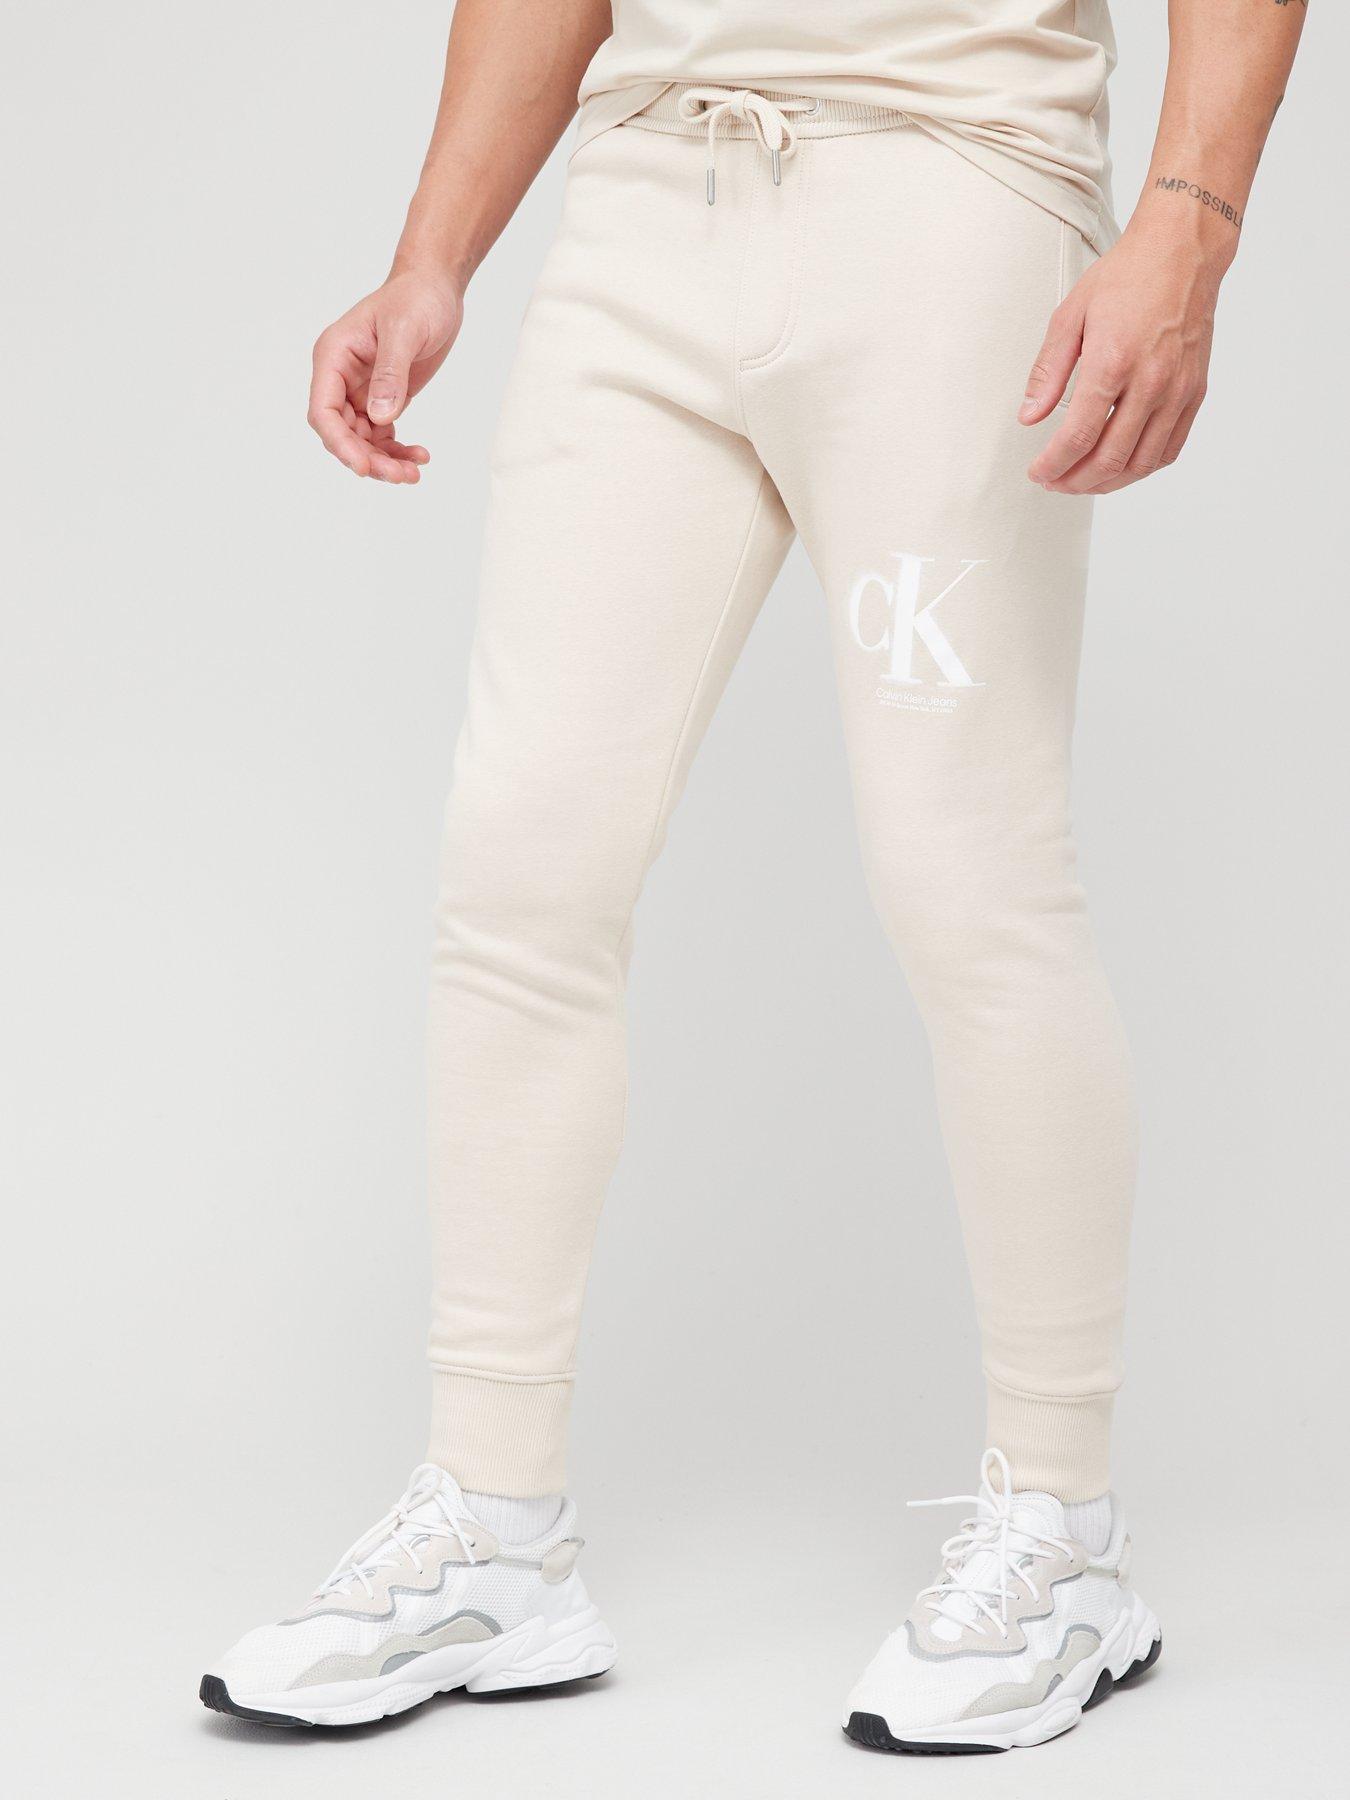 Calvin Klein CK mens red standard logo jogger sweatpants sweat pants size S  M